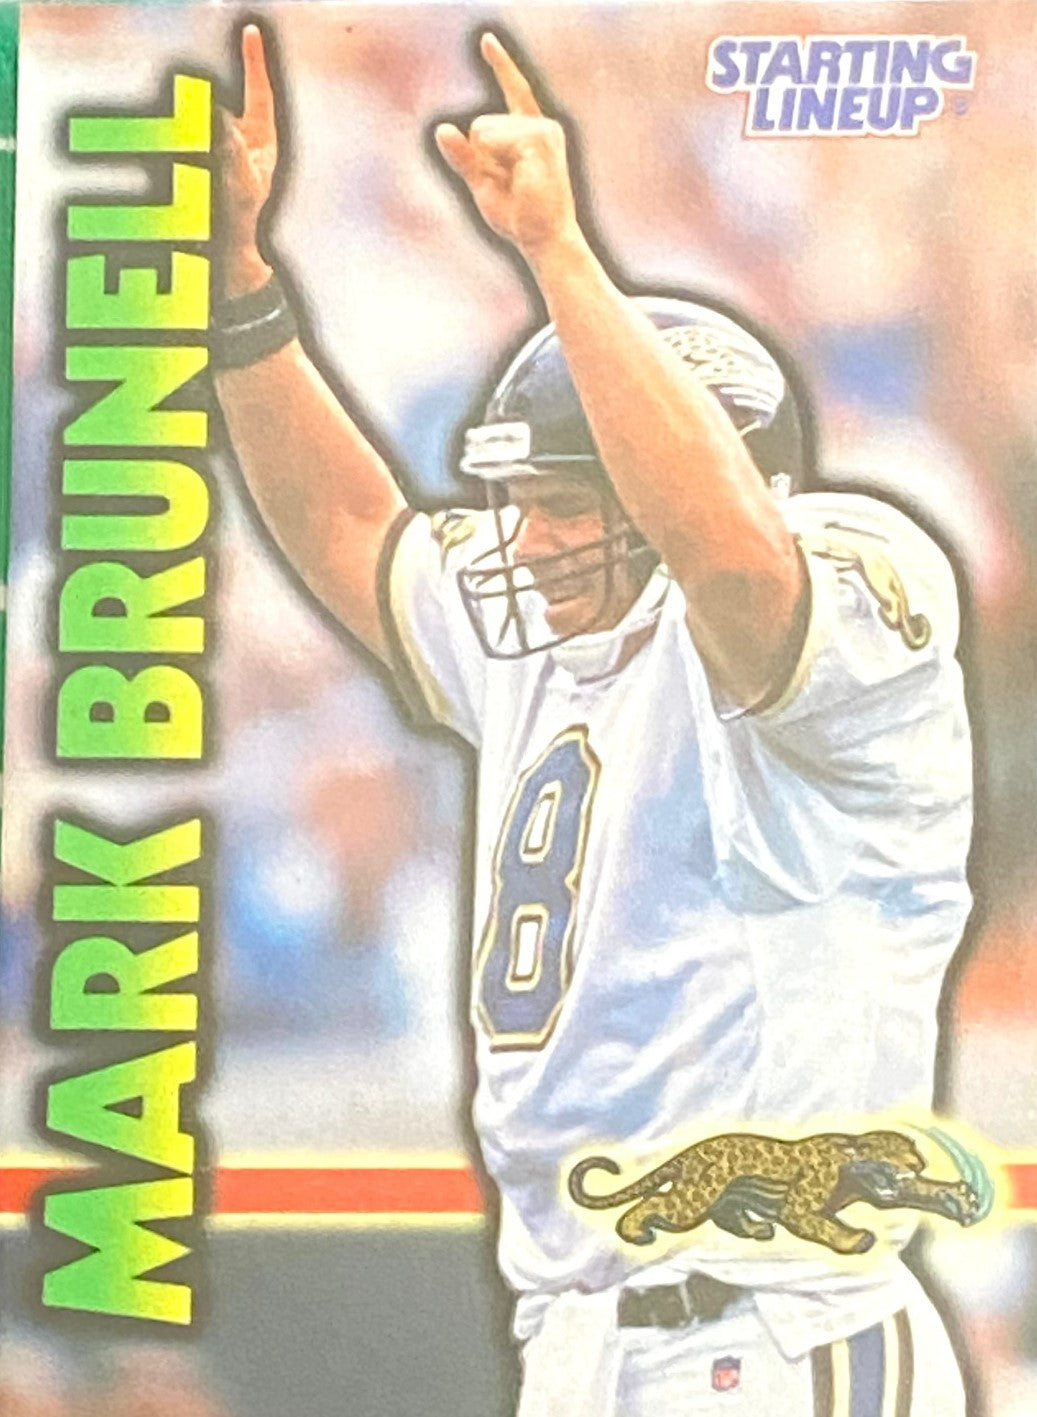 Mark Brunell 1999-2000 NFL Jacksonville Jaguars Starting Lineup Figurine NOS by Hasbro